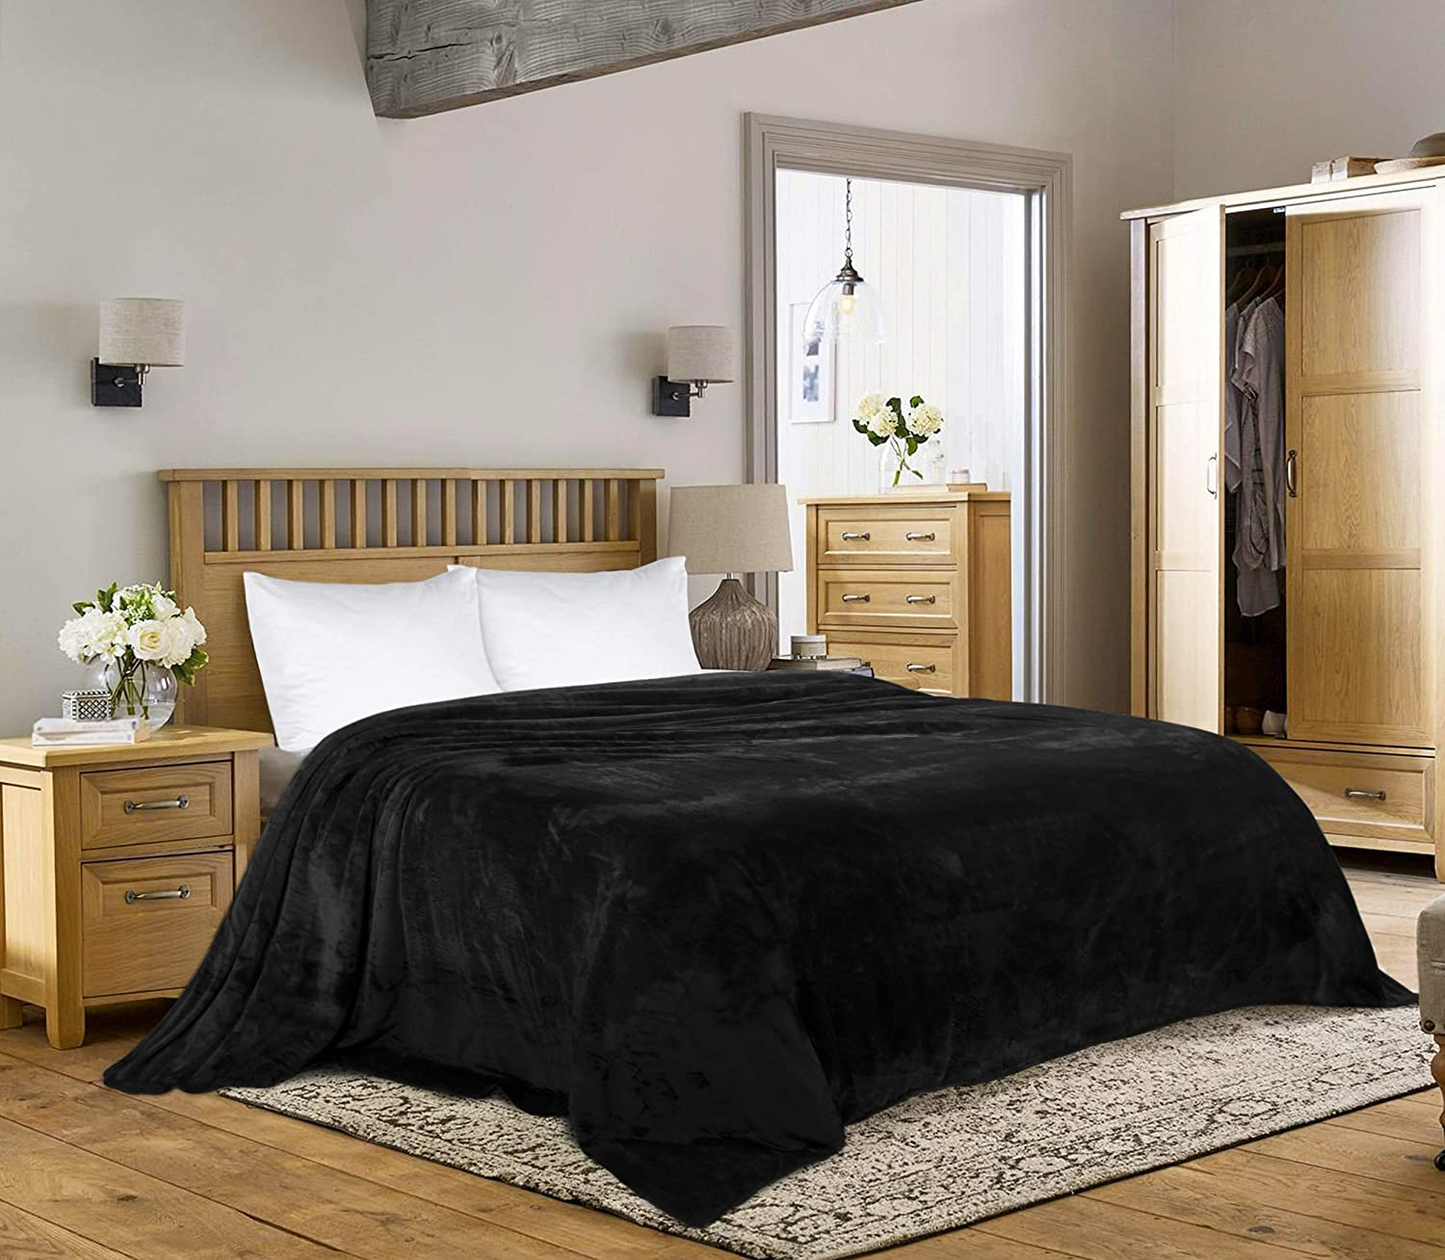  Fleece Blanket King Size Black 300GSM Luxury Fuzzy Soft Anti-Static Microfiber Bed Blanket